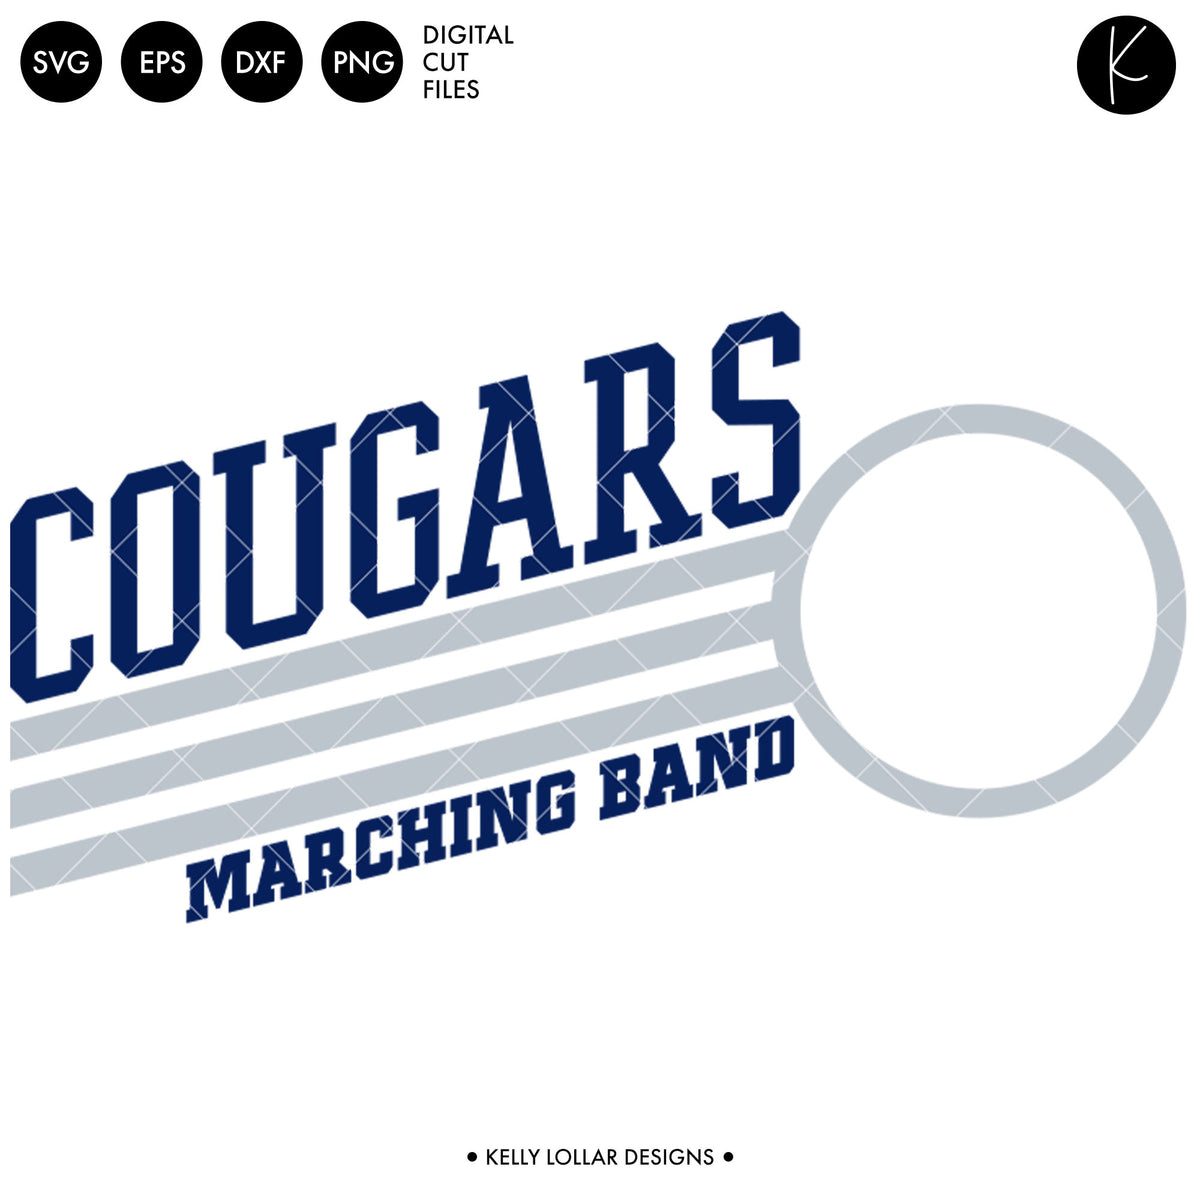 Cougars Band Bundle | SVG DXF EPS PNG Cut Files